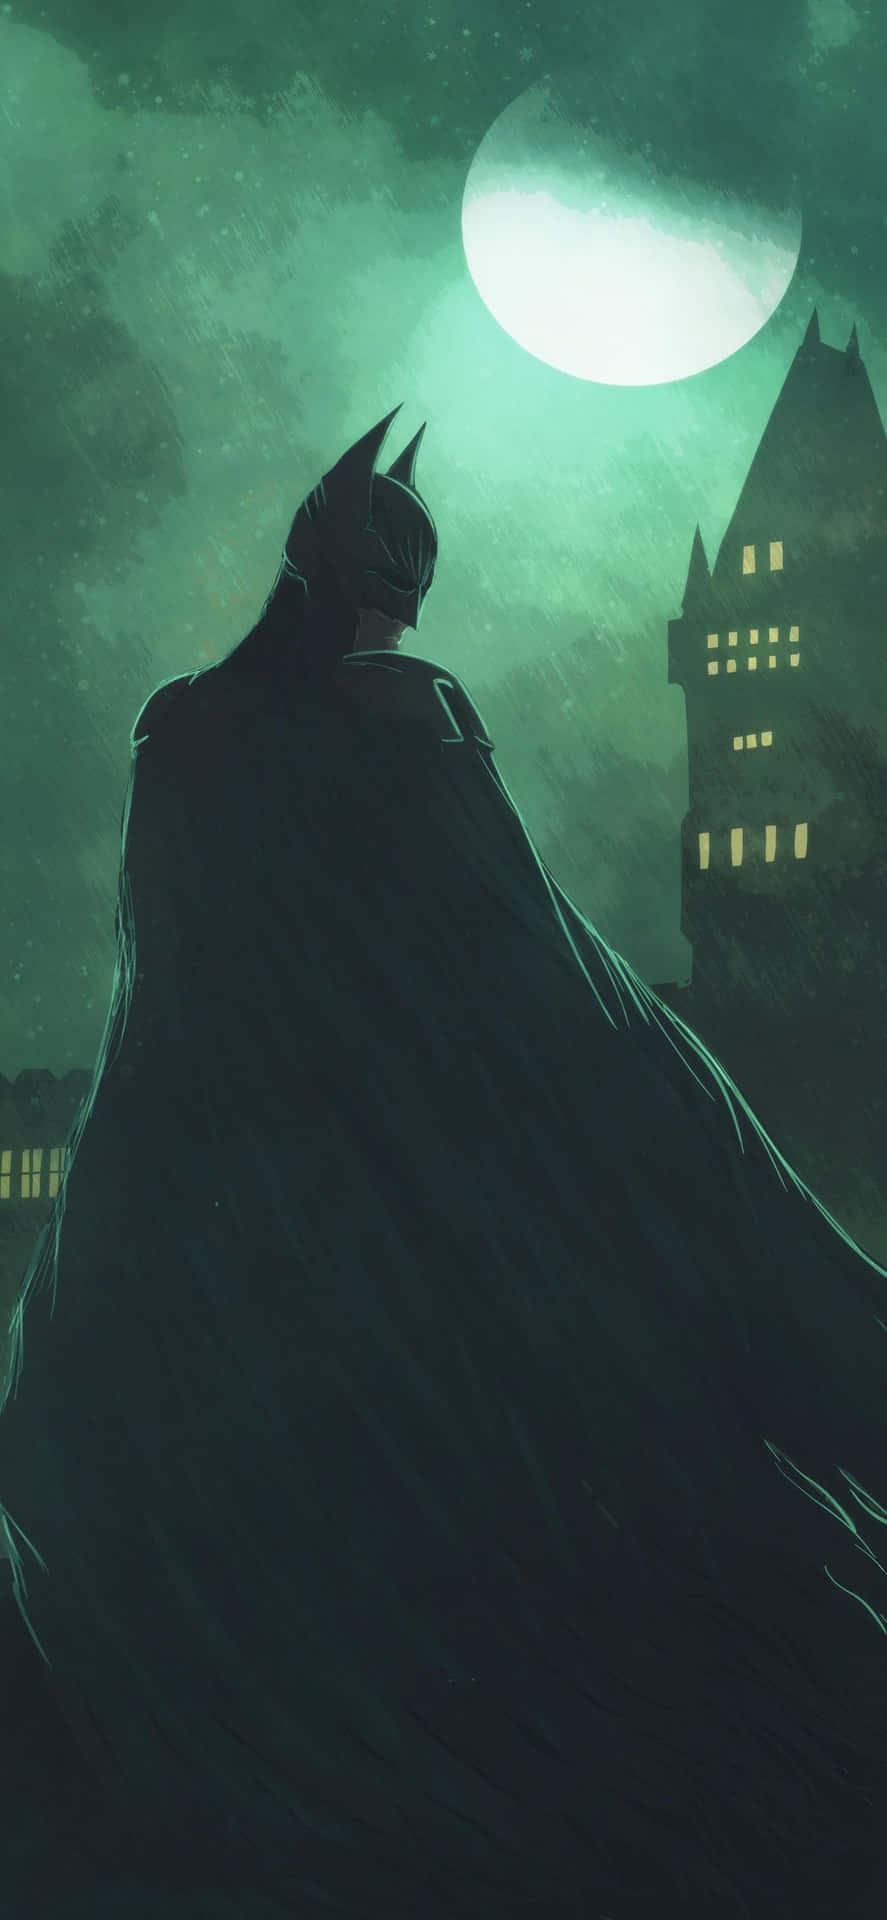 "The Dark Knight Rises" Wallpaper